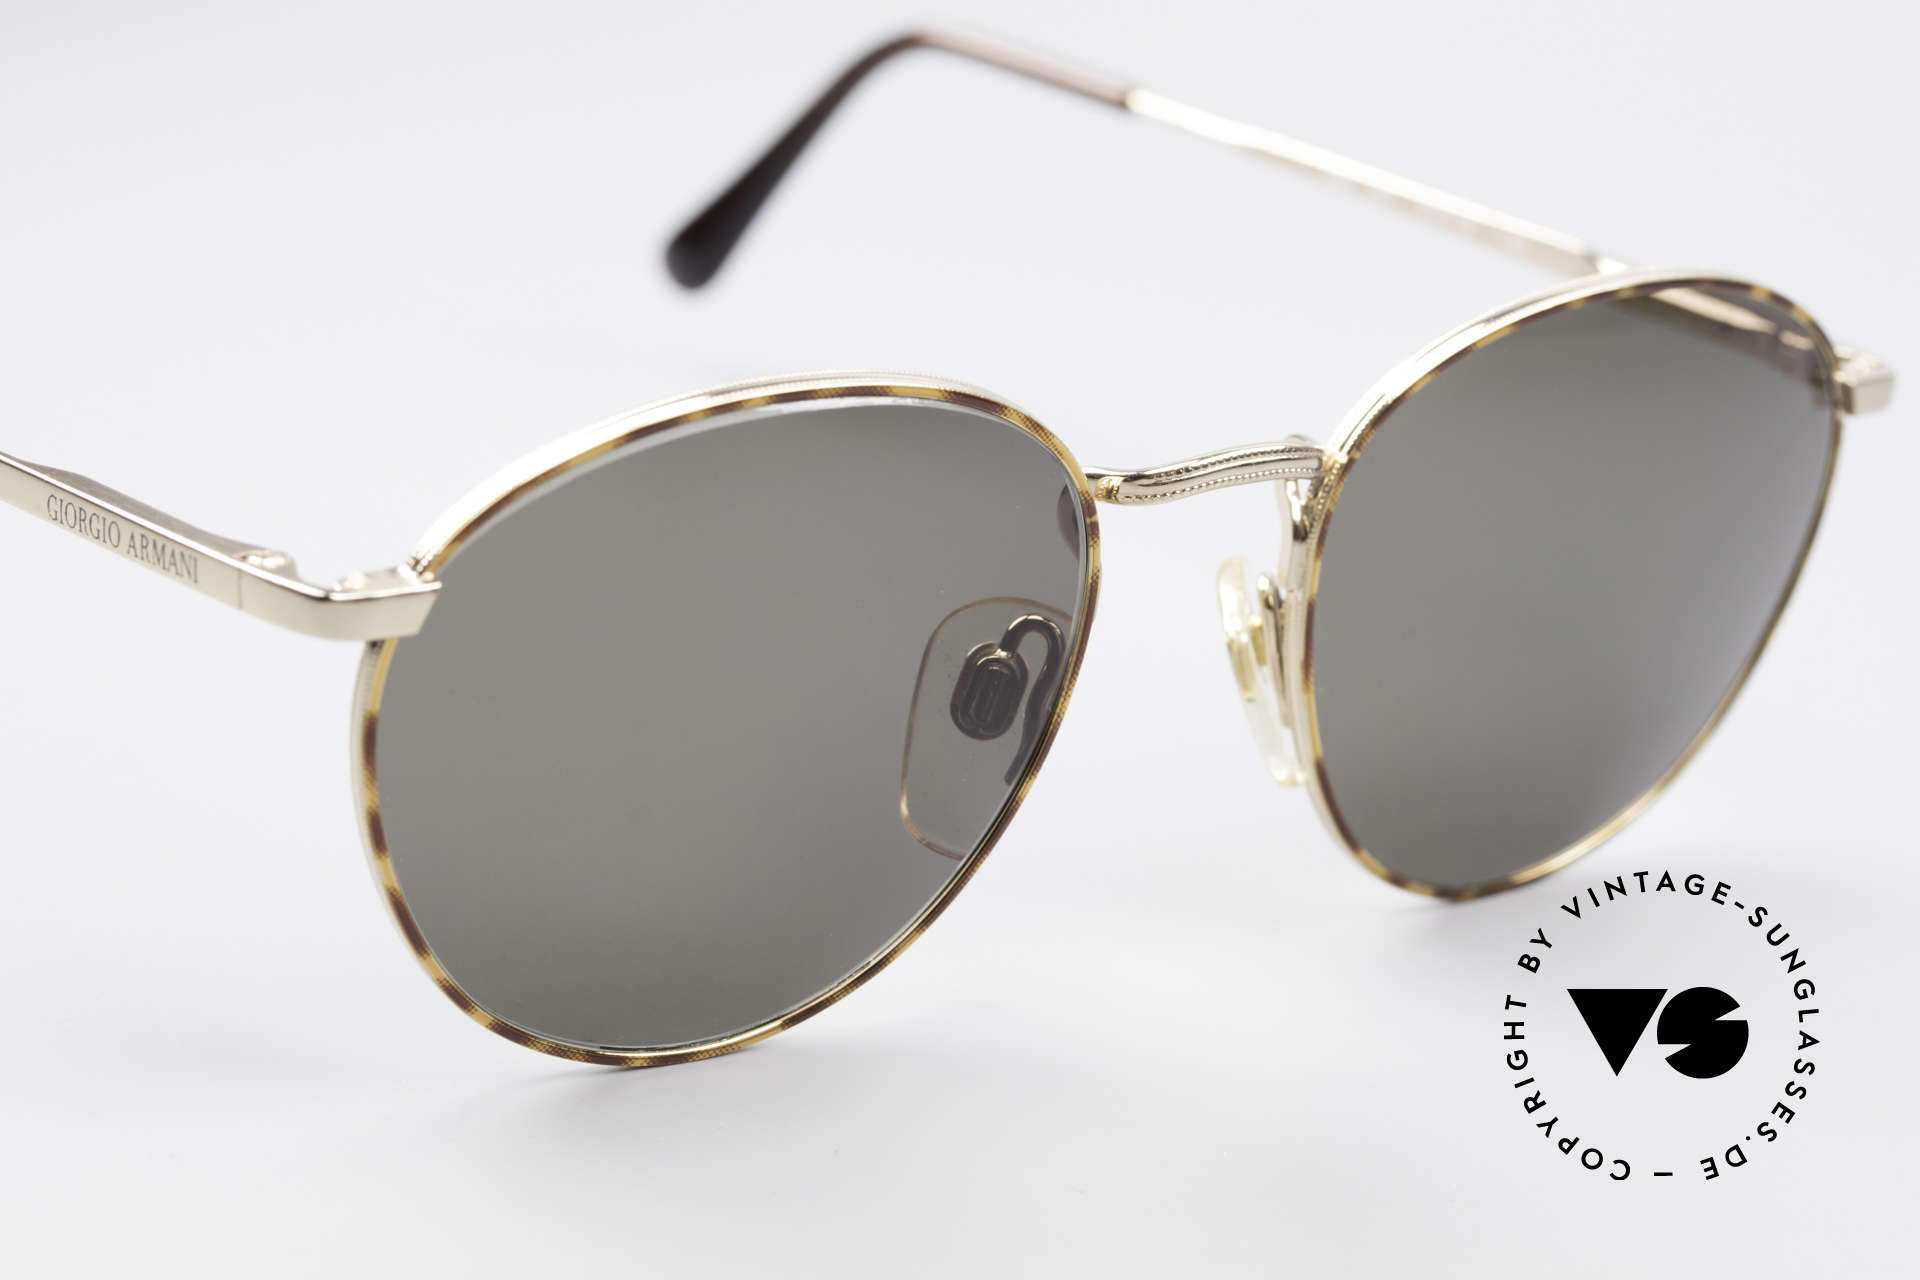 Giorgio Armani 166 Panto Sunglasses Gentlemen, NO RETRO specs, but a unique 25 years old ORIGINAL, Made for Men